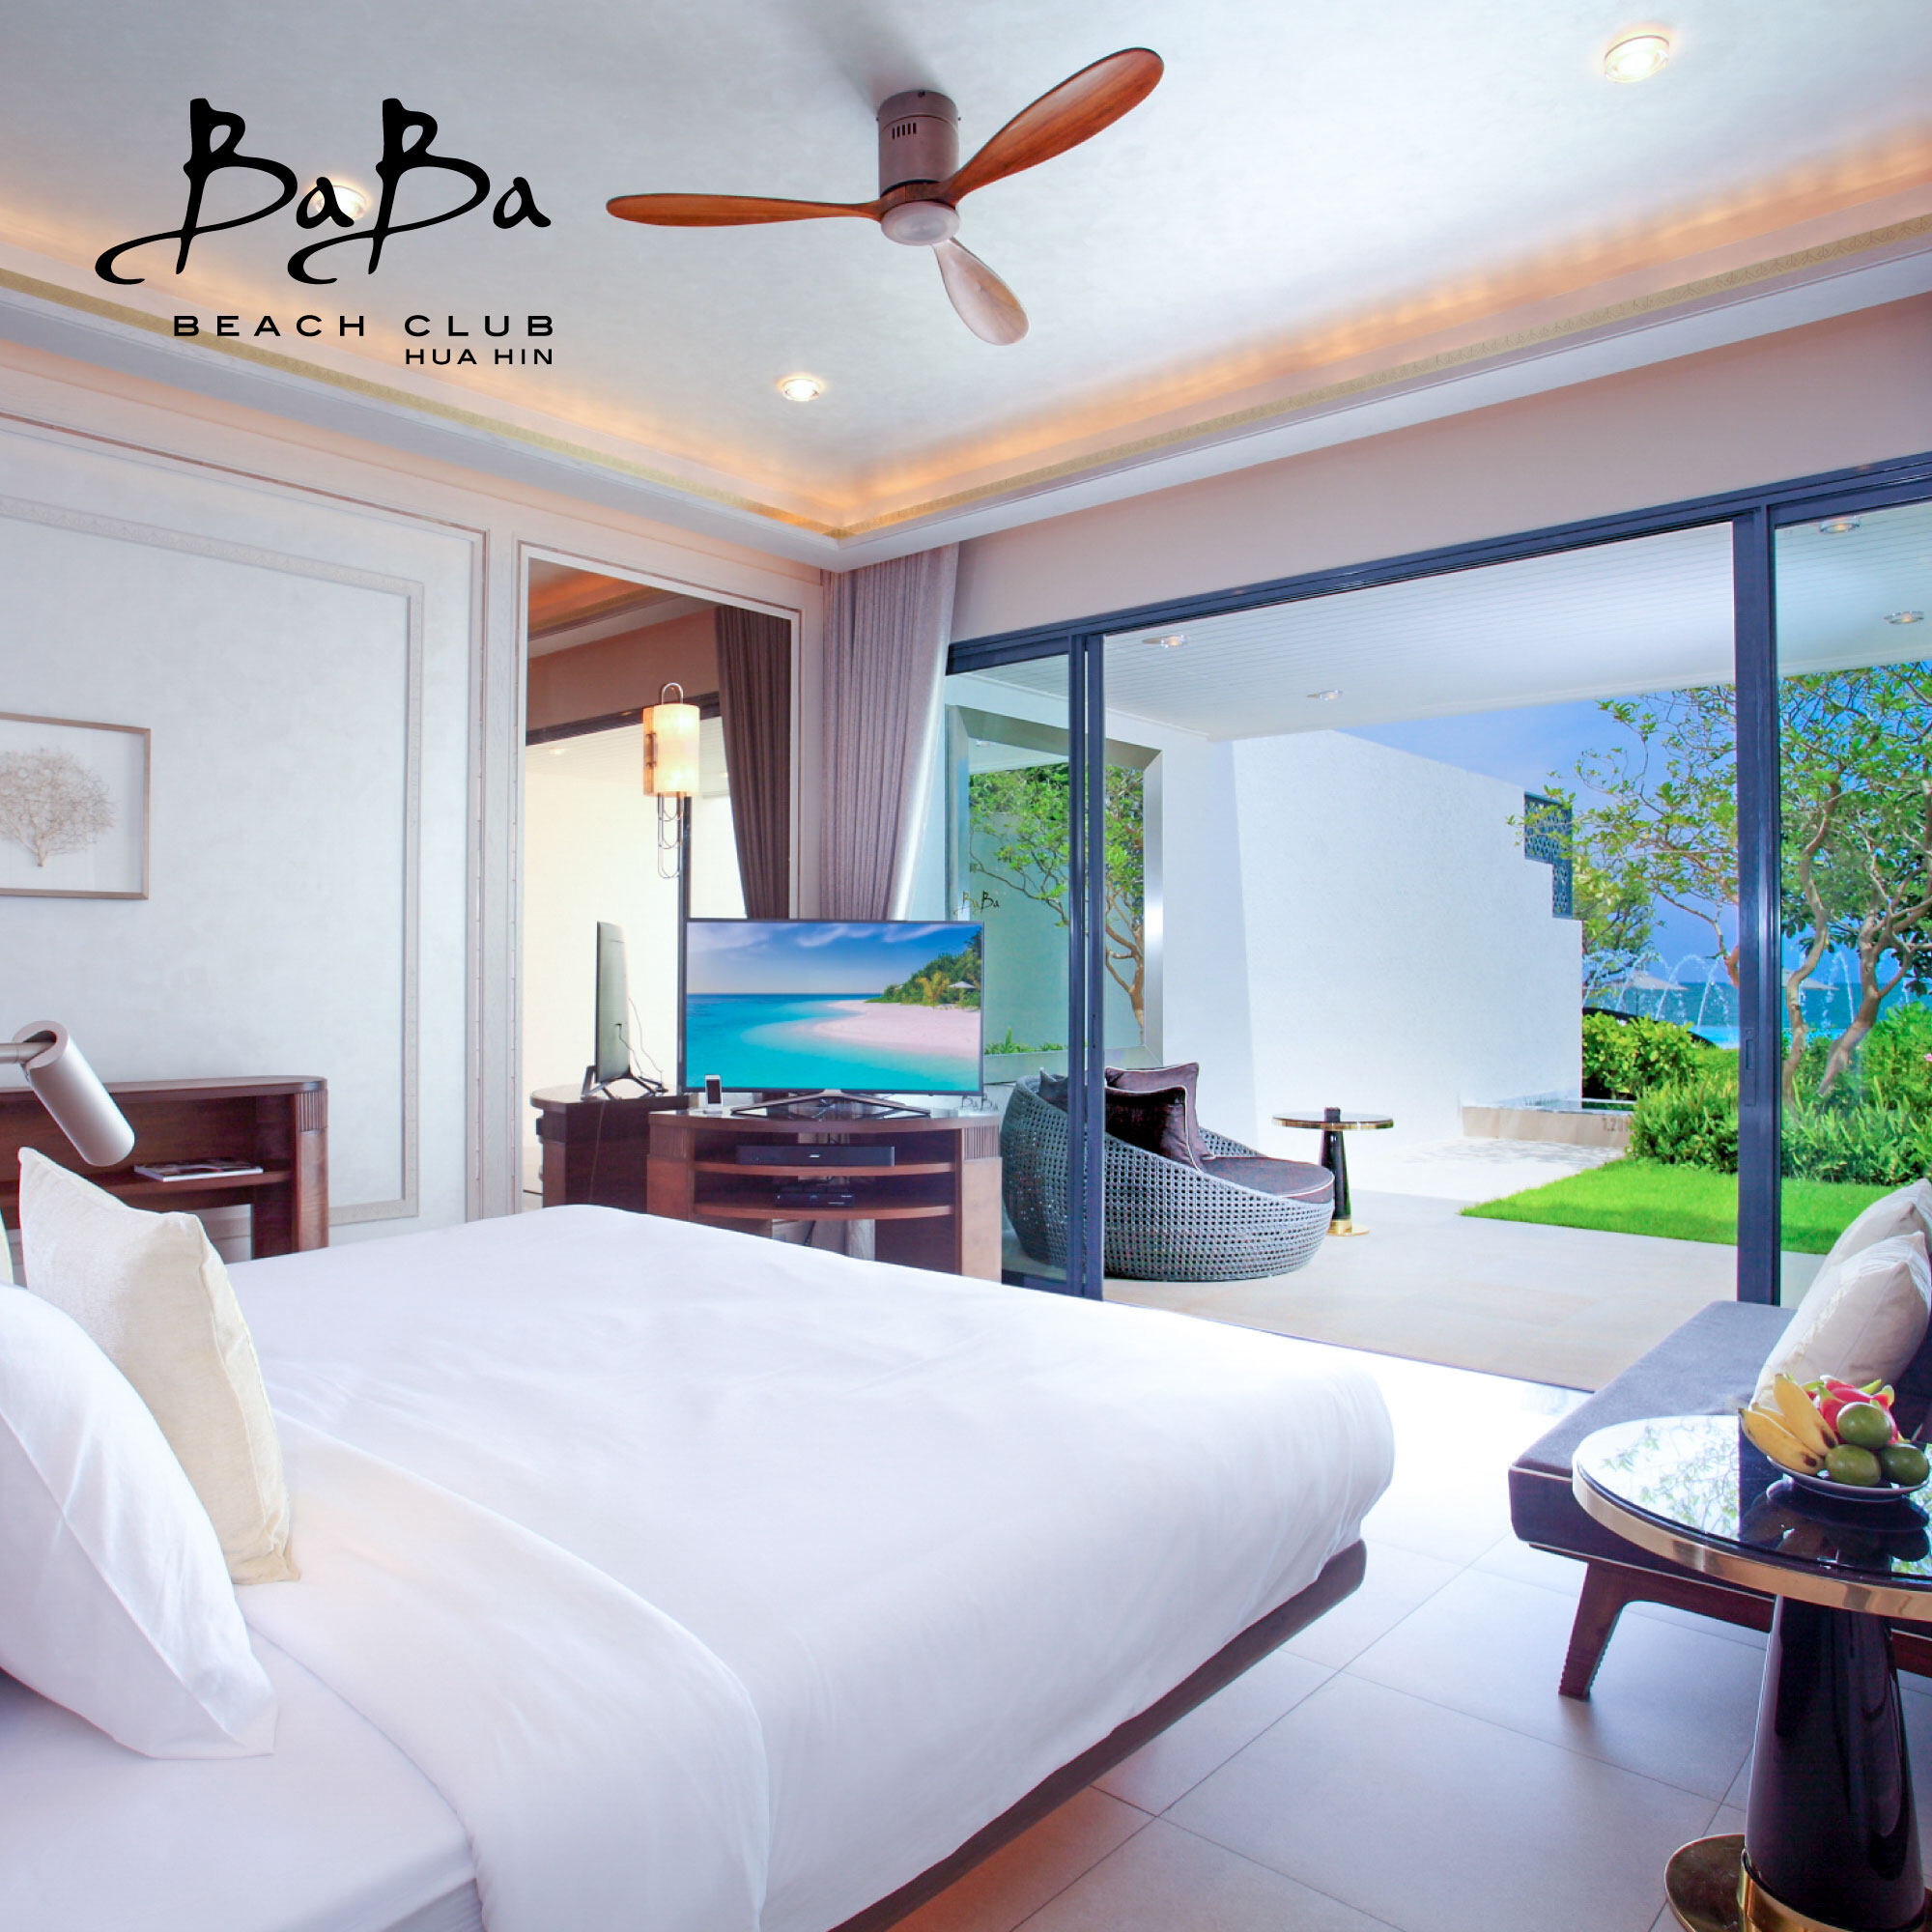 Baba Beach Club Hua Hin Luxury Pool Villa Hotel - ห้อง Beachfront Pool Suite (Ground Floor) 1 คืน